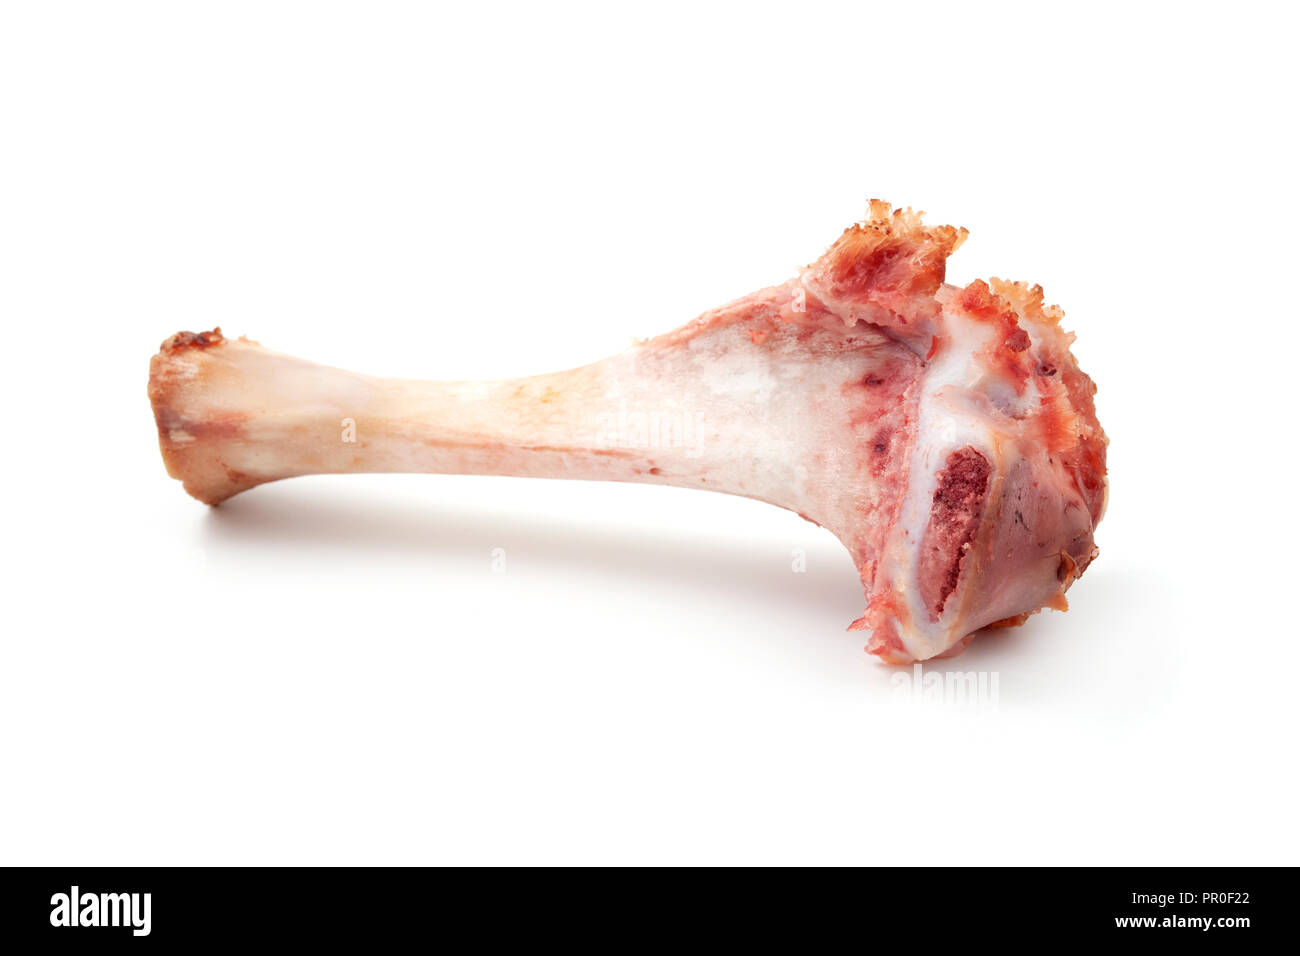 Ham hock bone on a white background Stock Photo